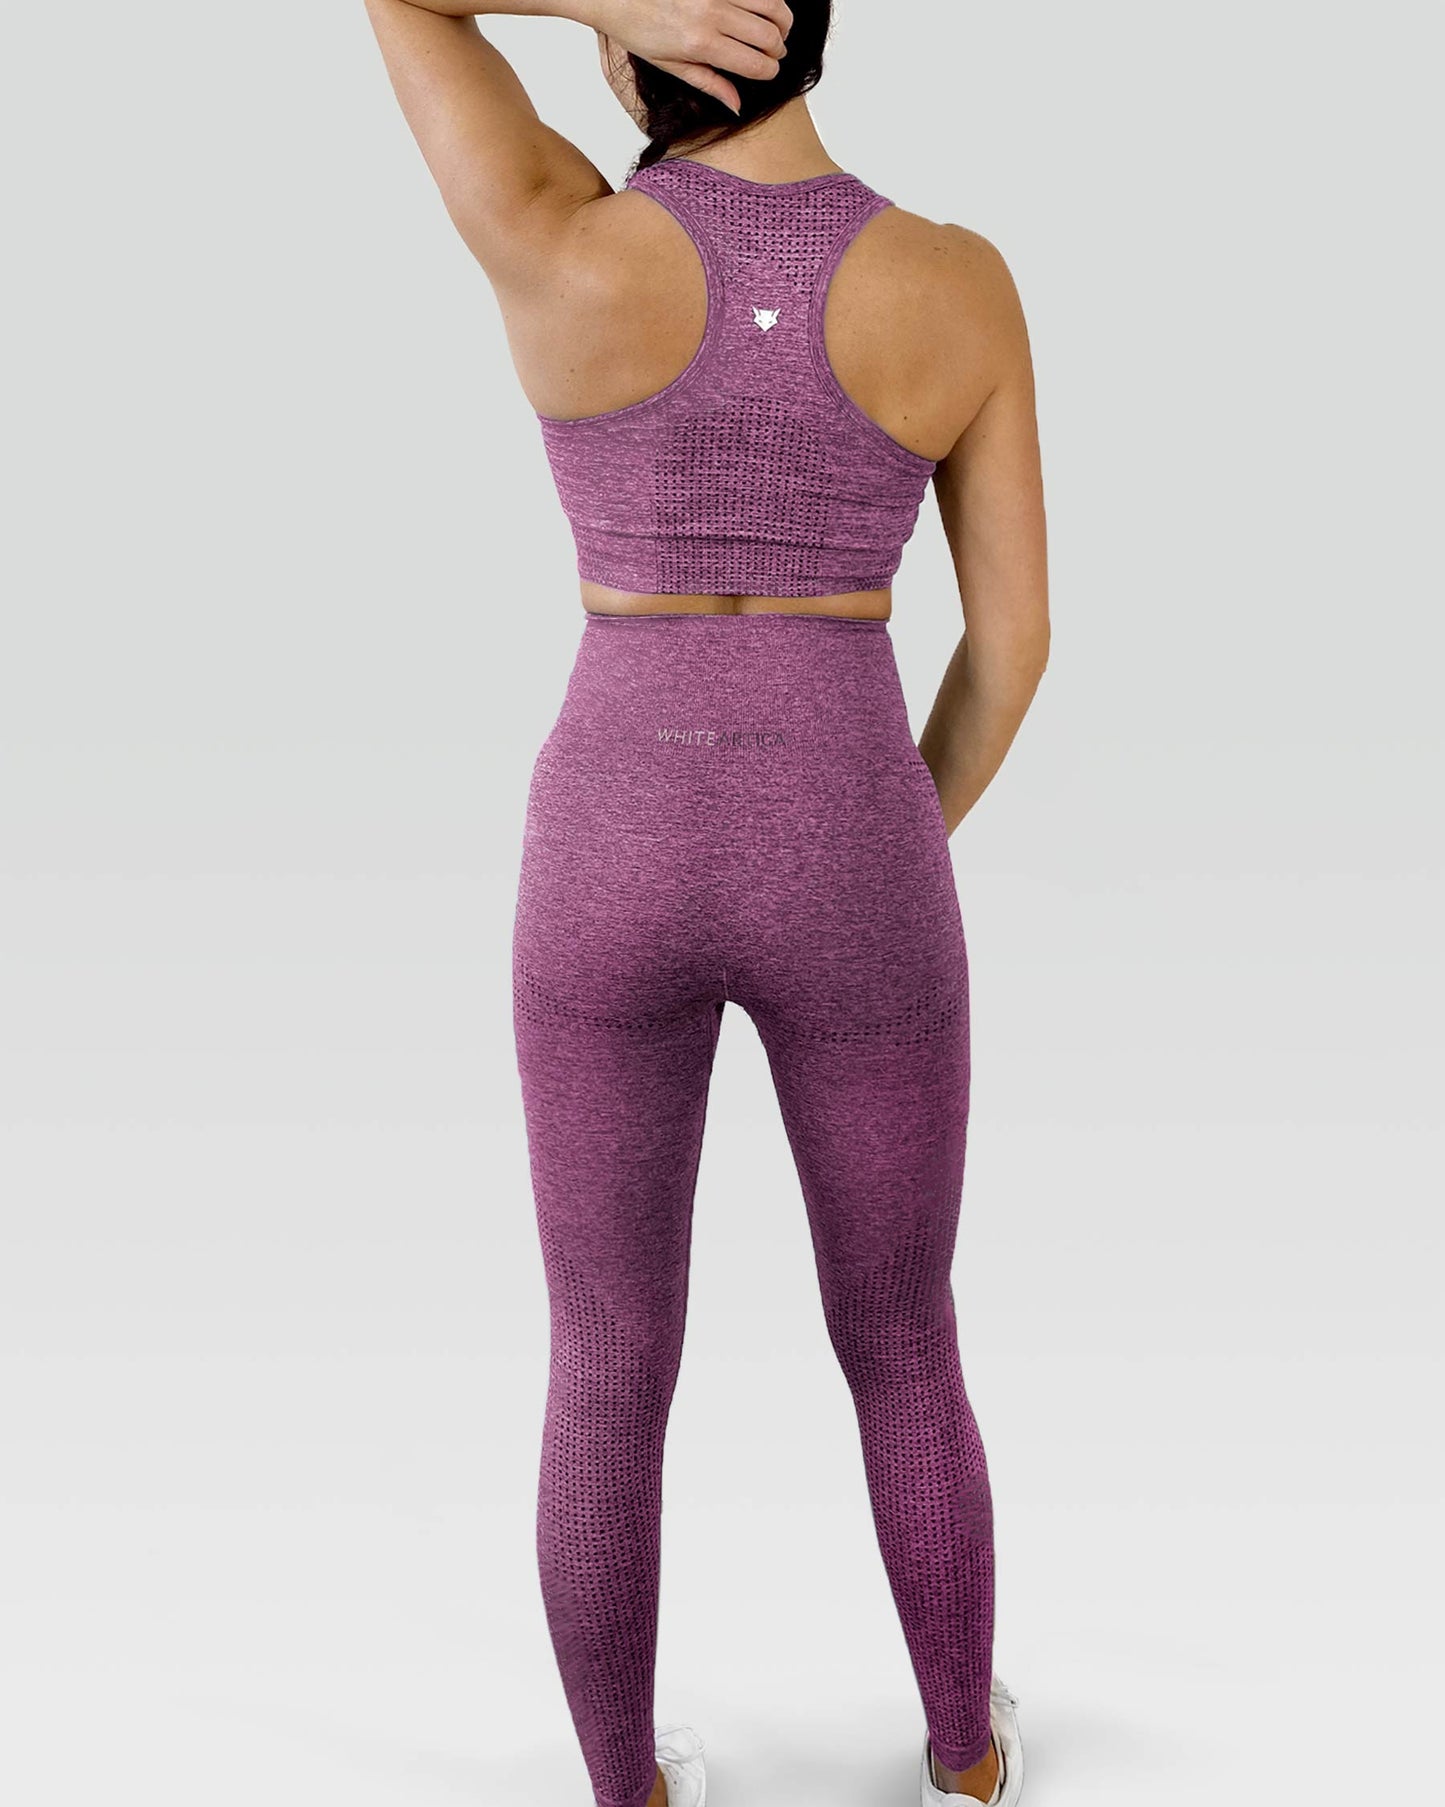 Elite 3 pieces activewear set - Purple